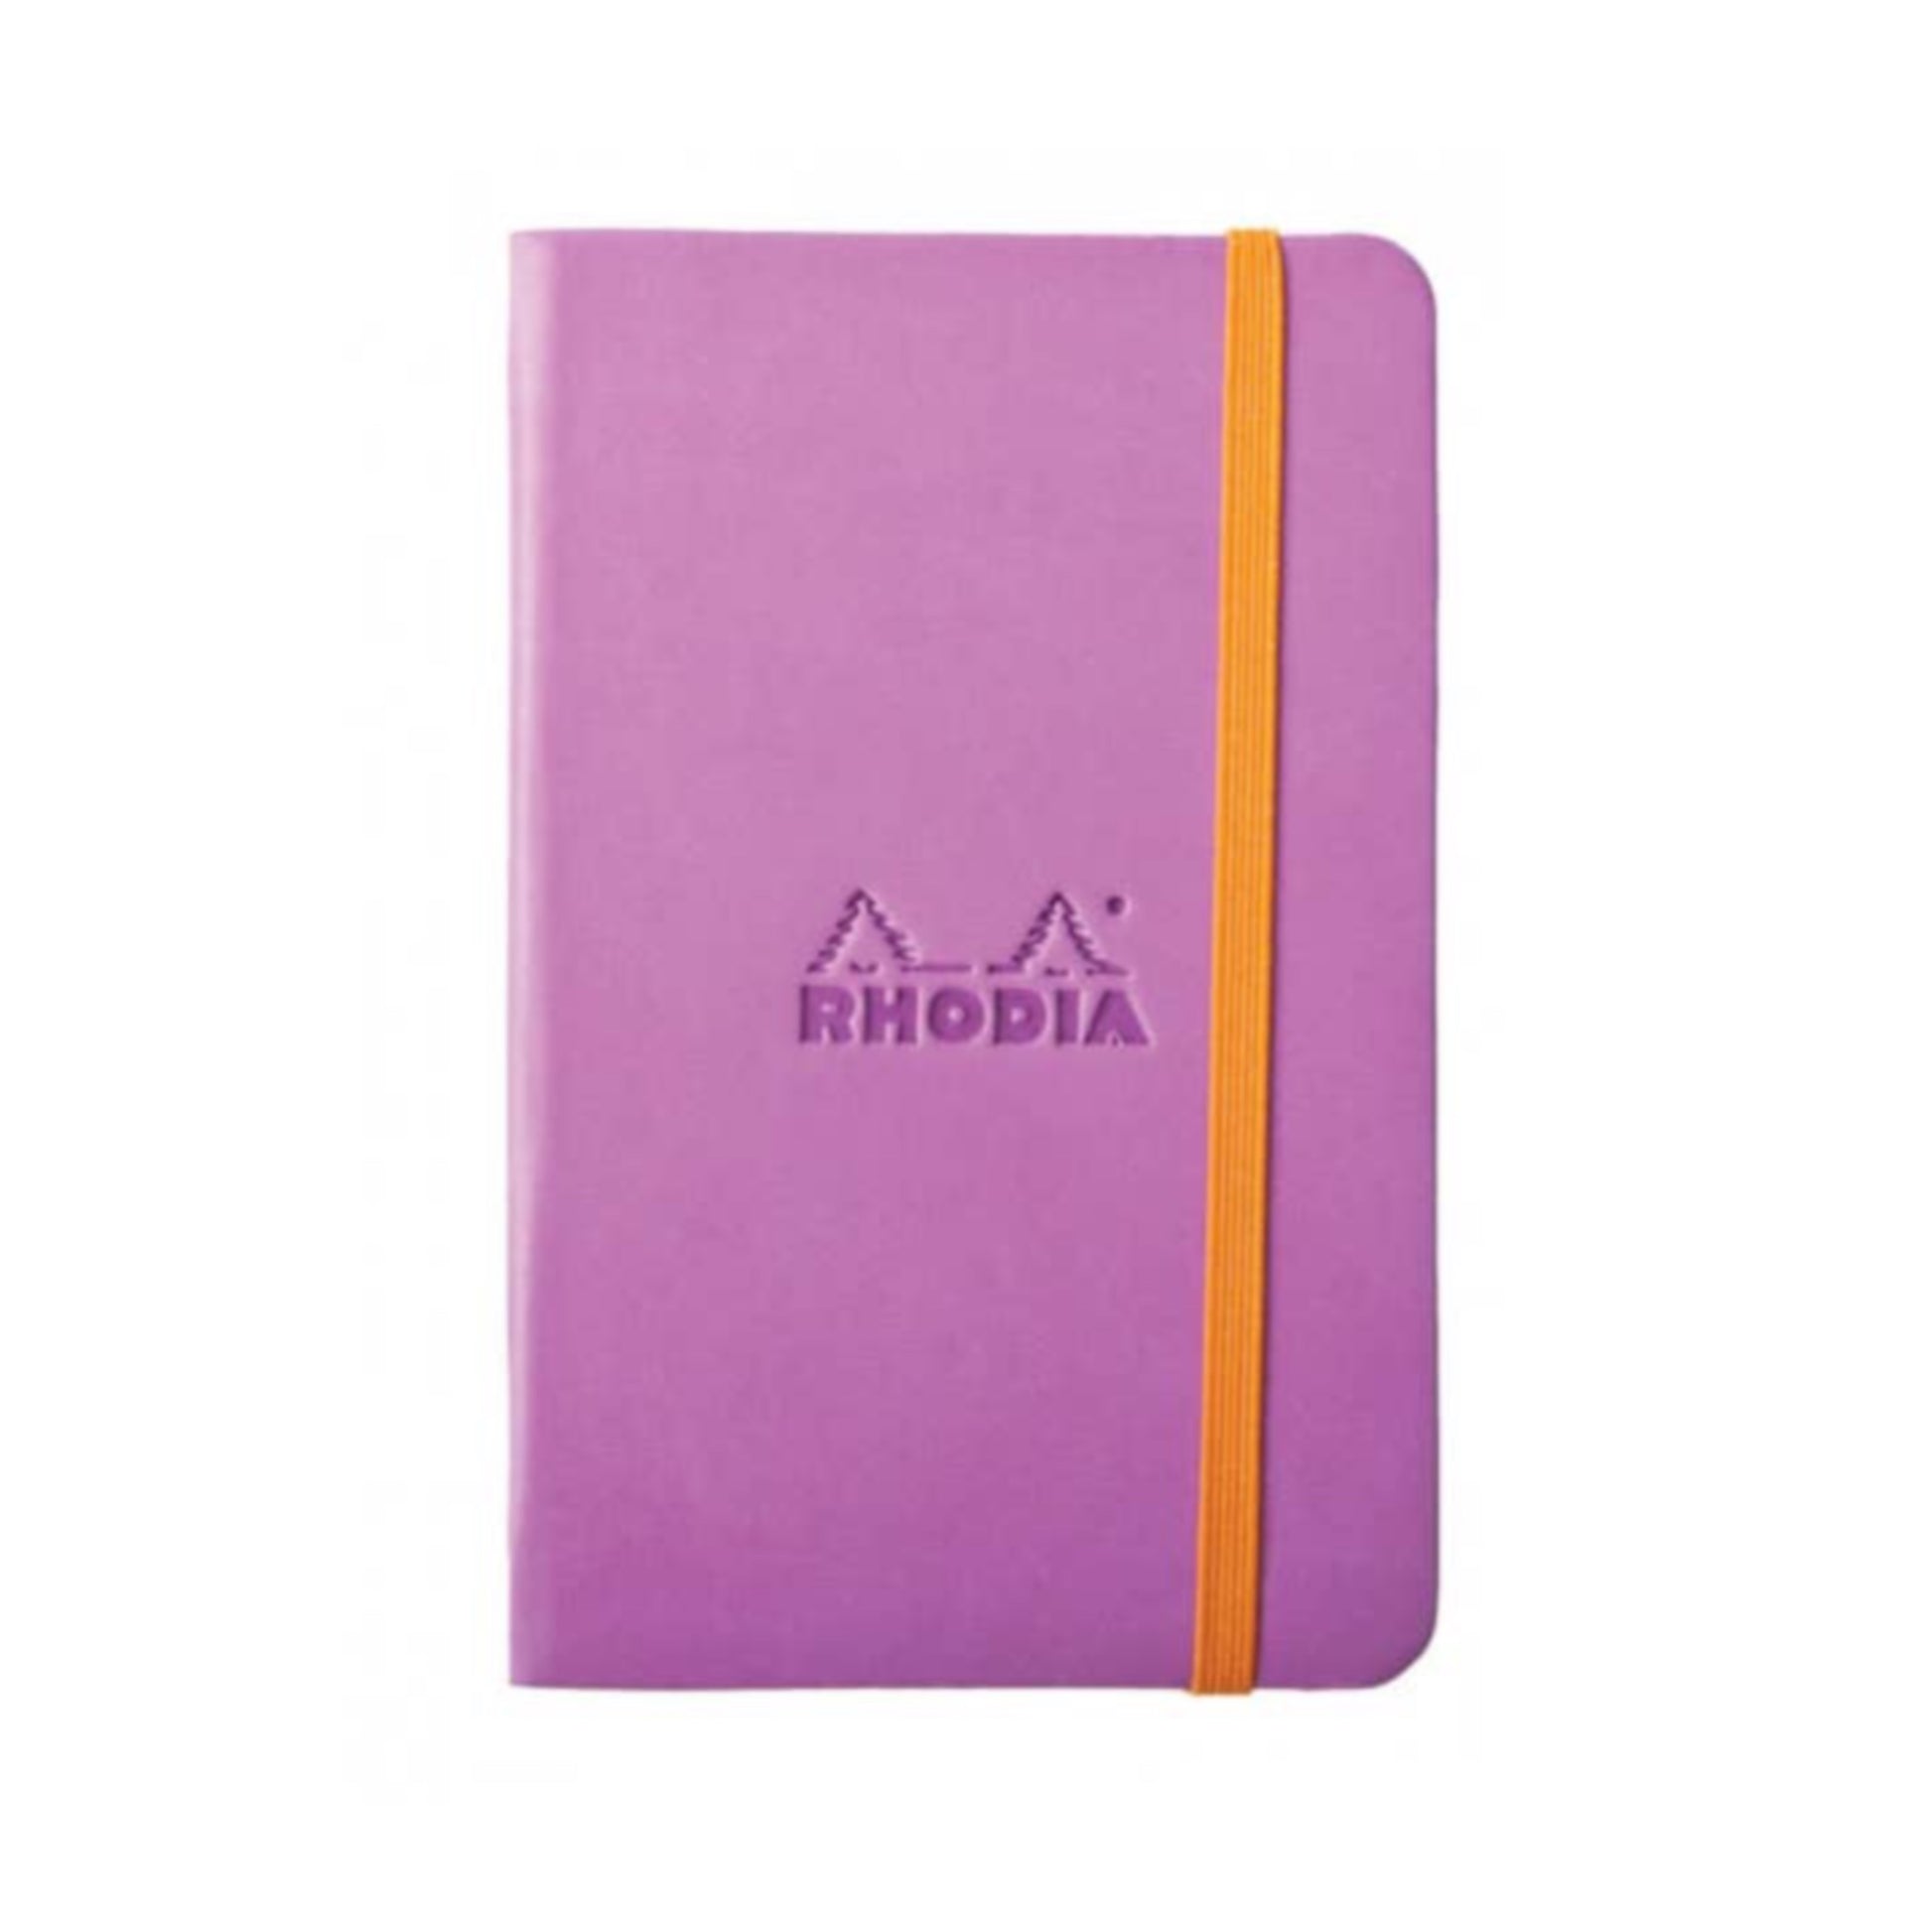 Rhodia Rhodiarama Hardcover Webnotebook - 5.5 x 8.5 inches - Lilac / - Blank Paper by Rhodia - K. A. Artist Shop